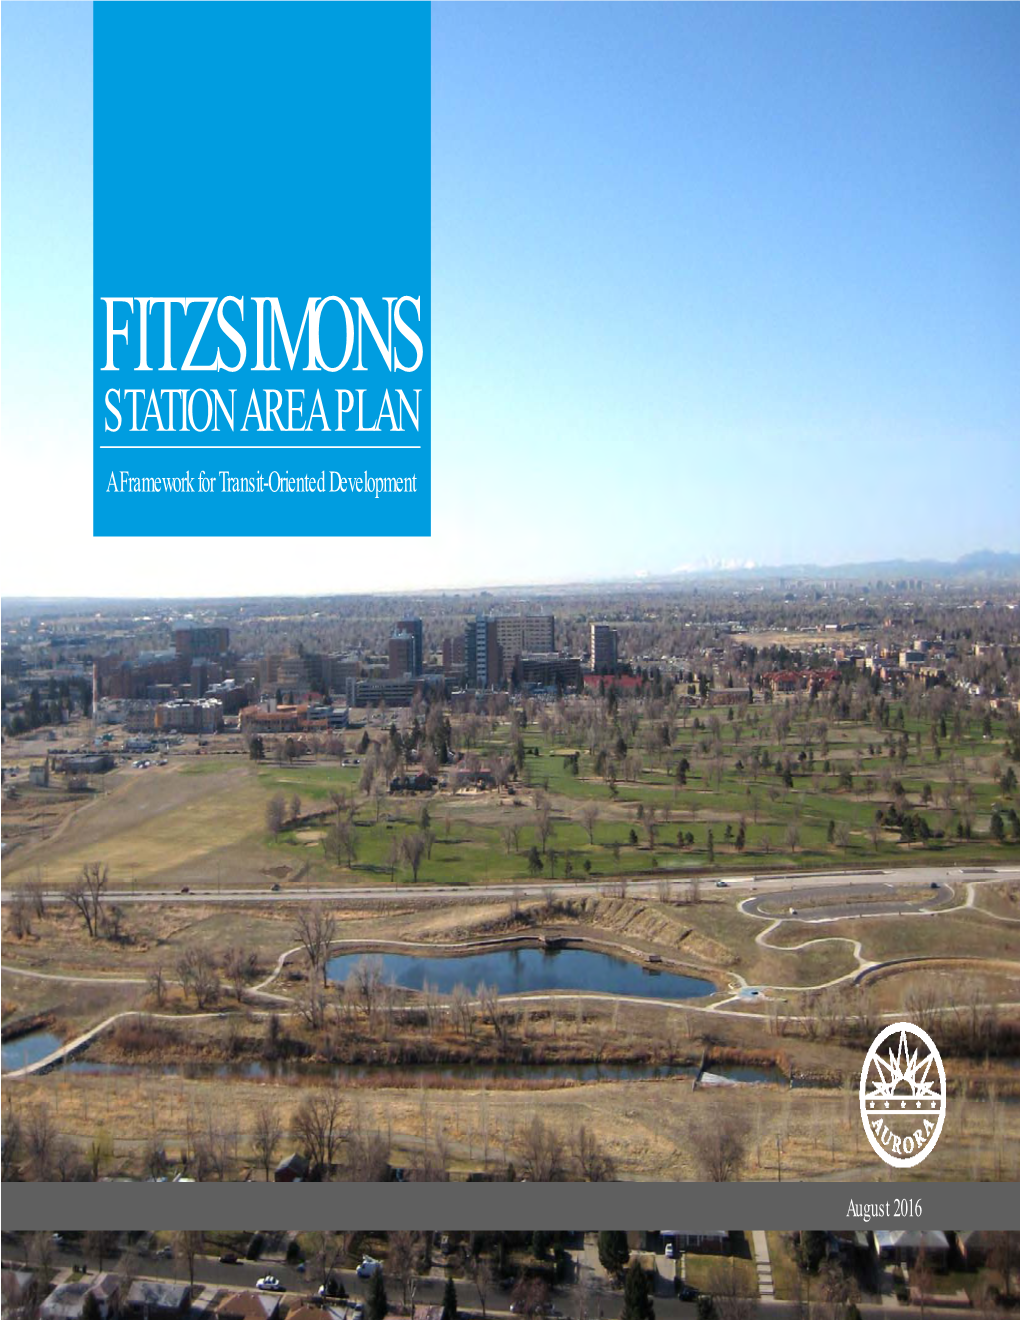 FITZSIMONS STATION AREA PLAN a Framework for Transit-Oriented Development